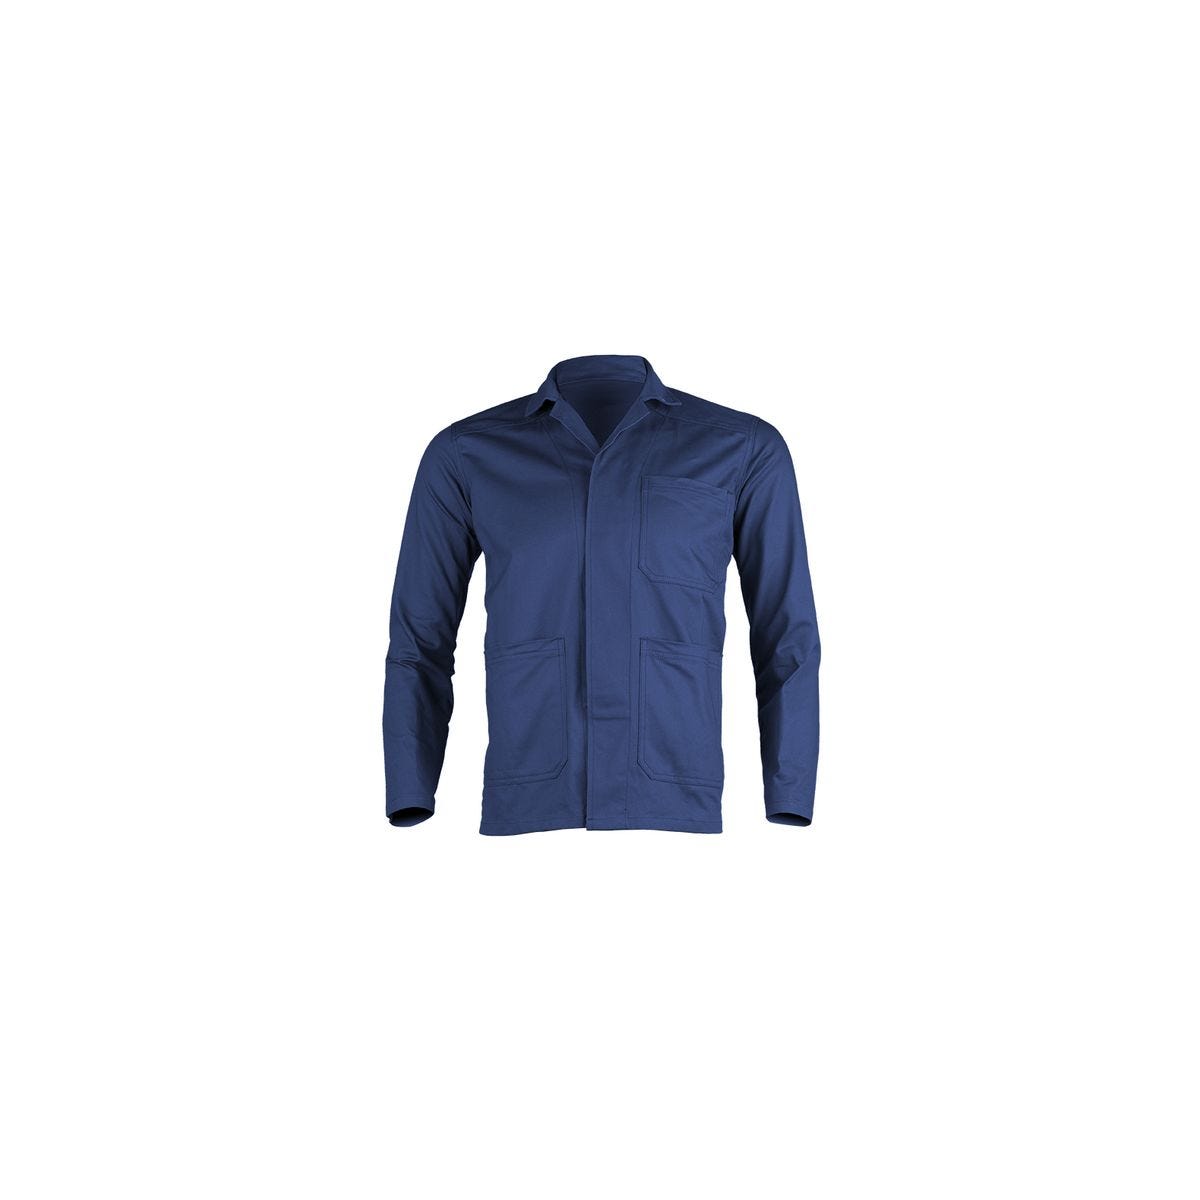 INDUSTRY Veste, bleu royal, 65%PES/35%PES, 245 g/m² - COVERGUARD - Taille L 0